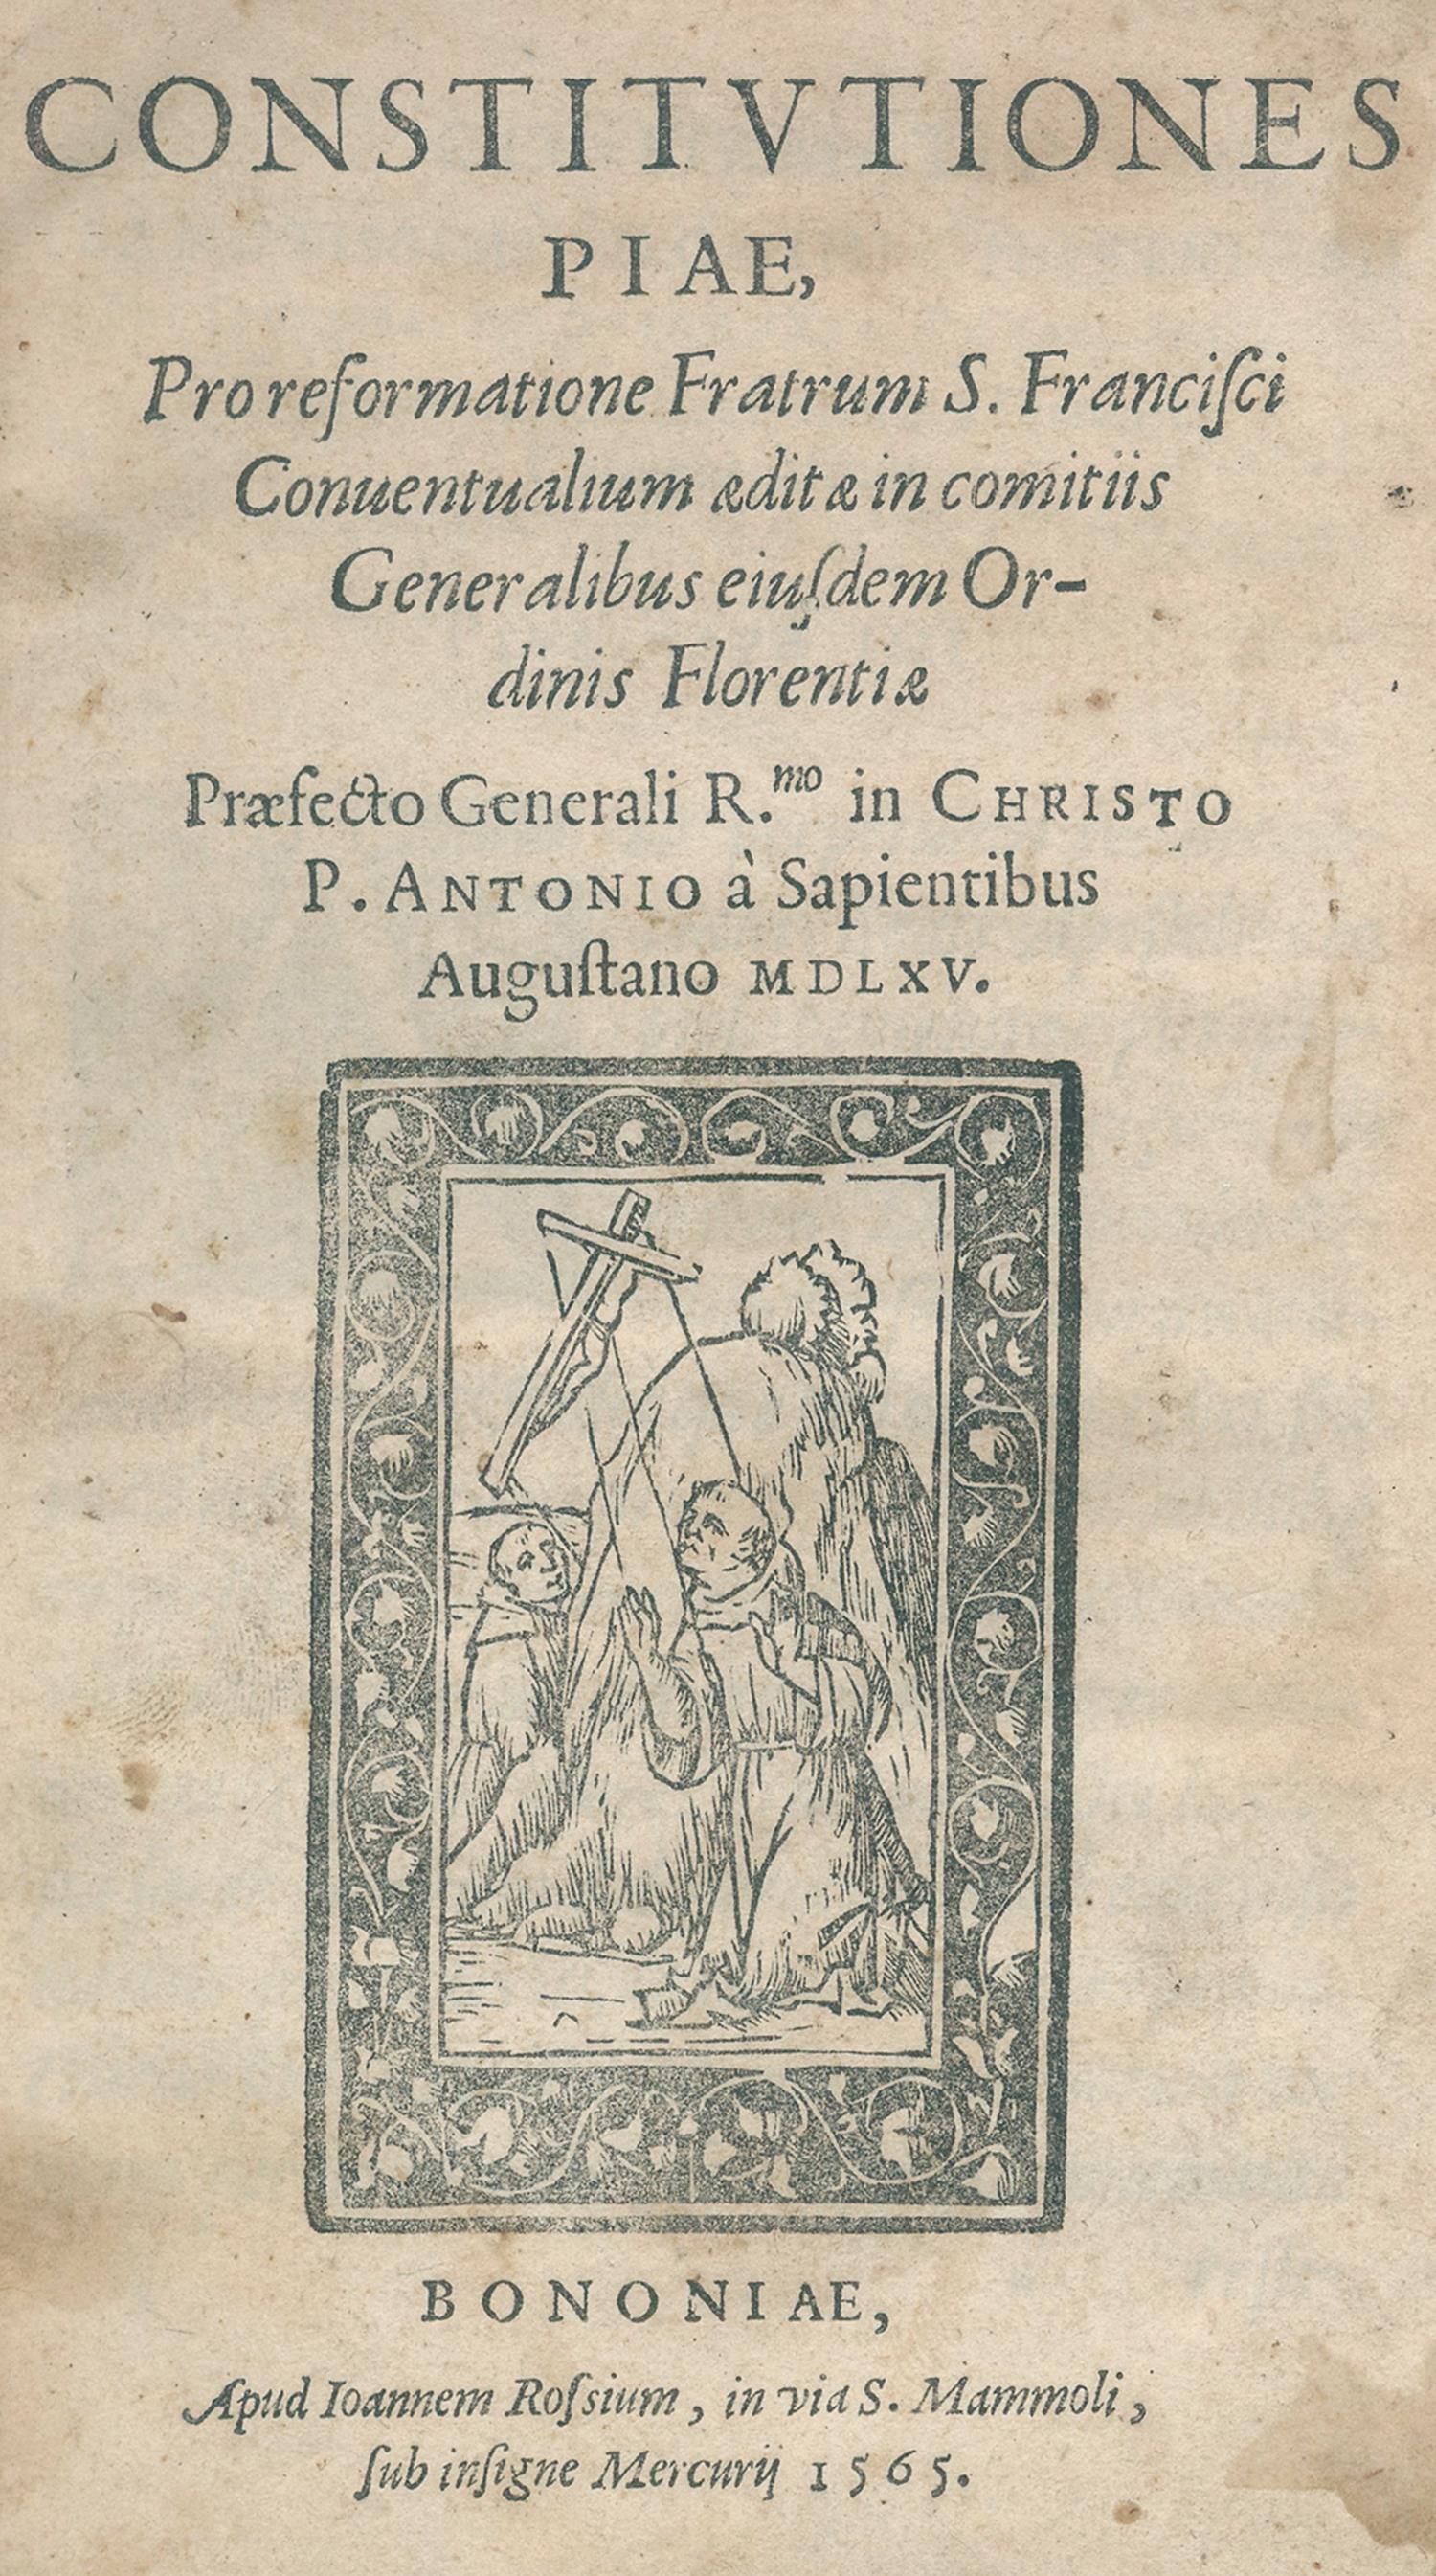 Sapientibus,A. | Bild Nr.1